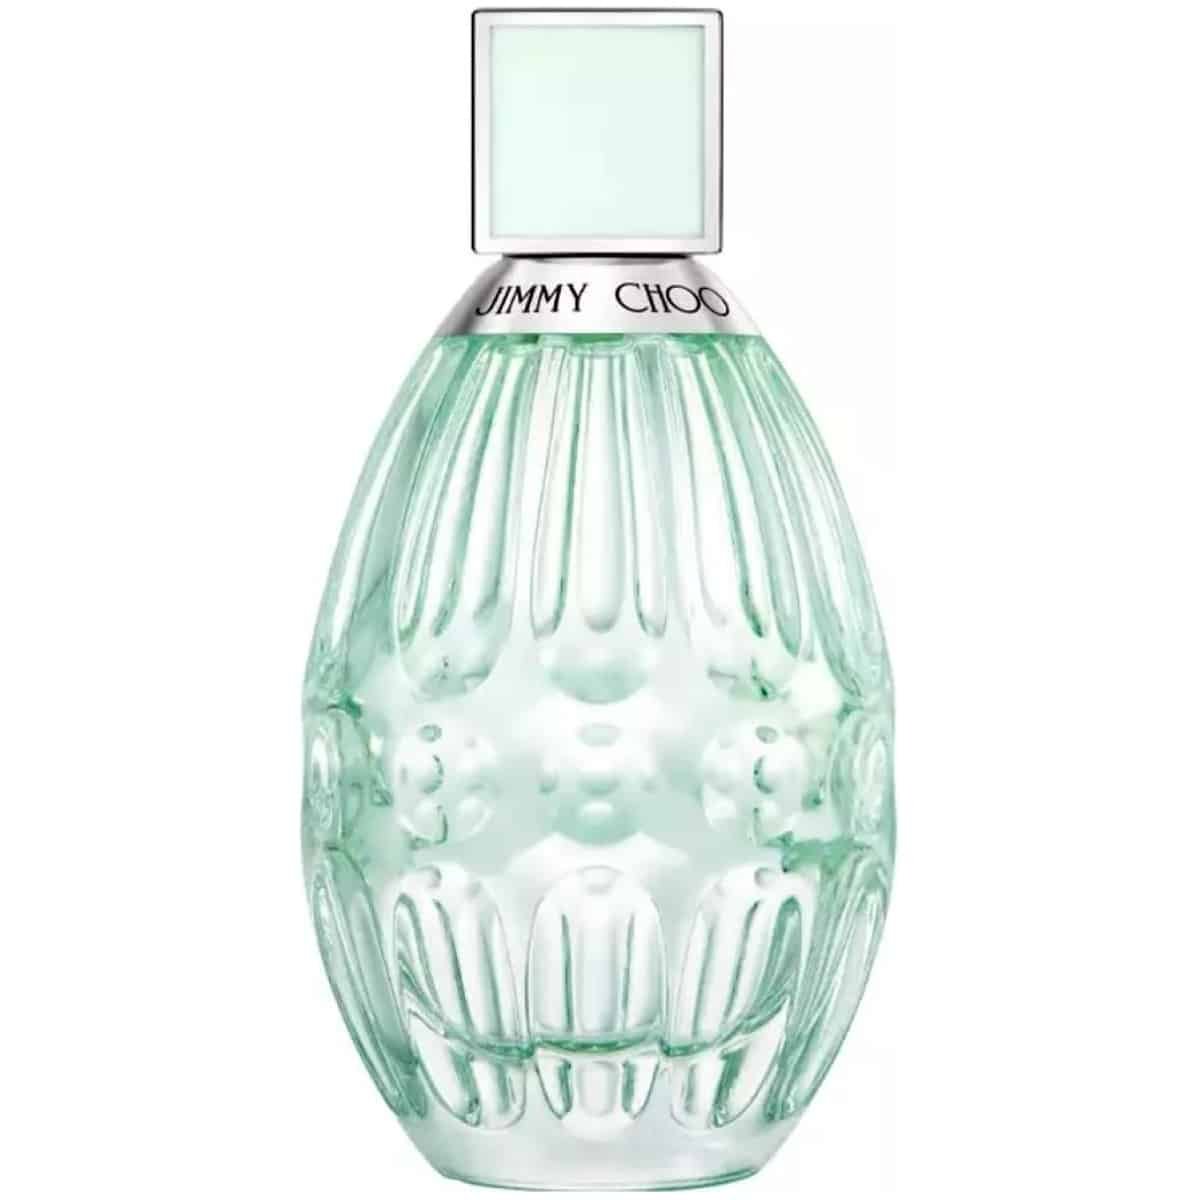 Jimmy Choo Floarl EDT Perfume For Women 4.5 ml